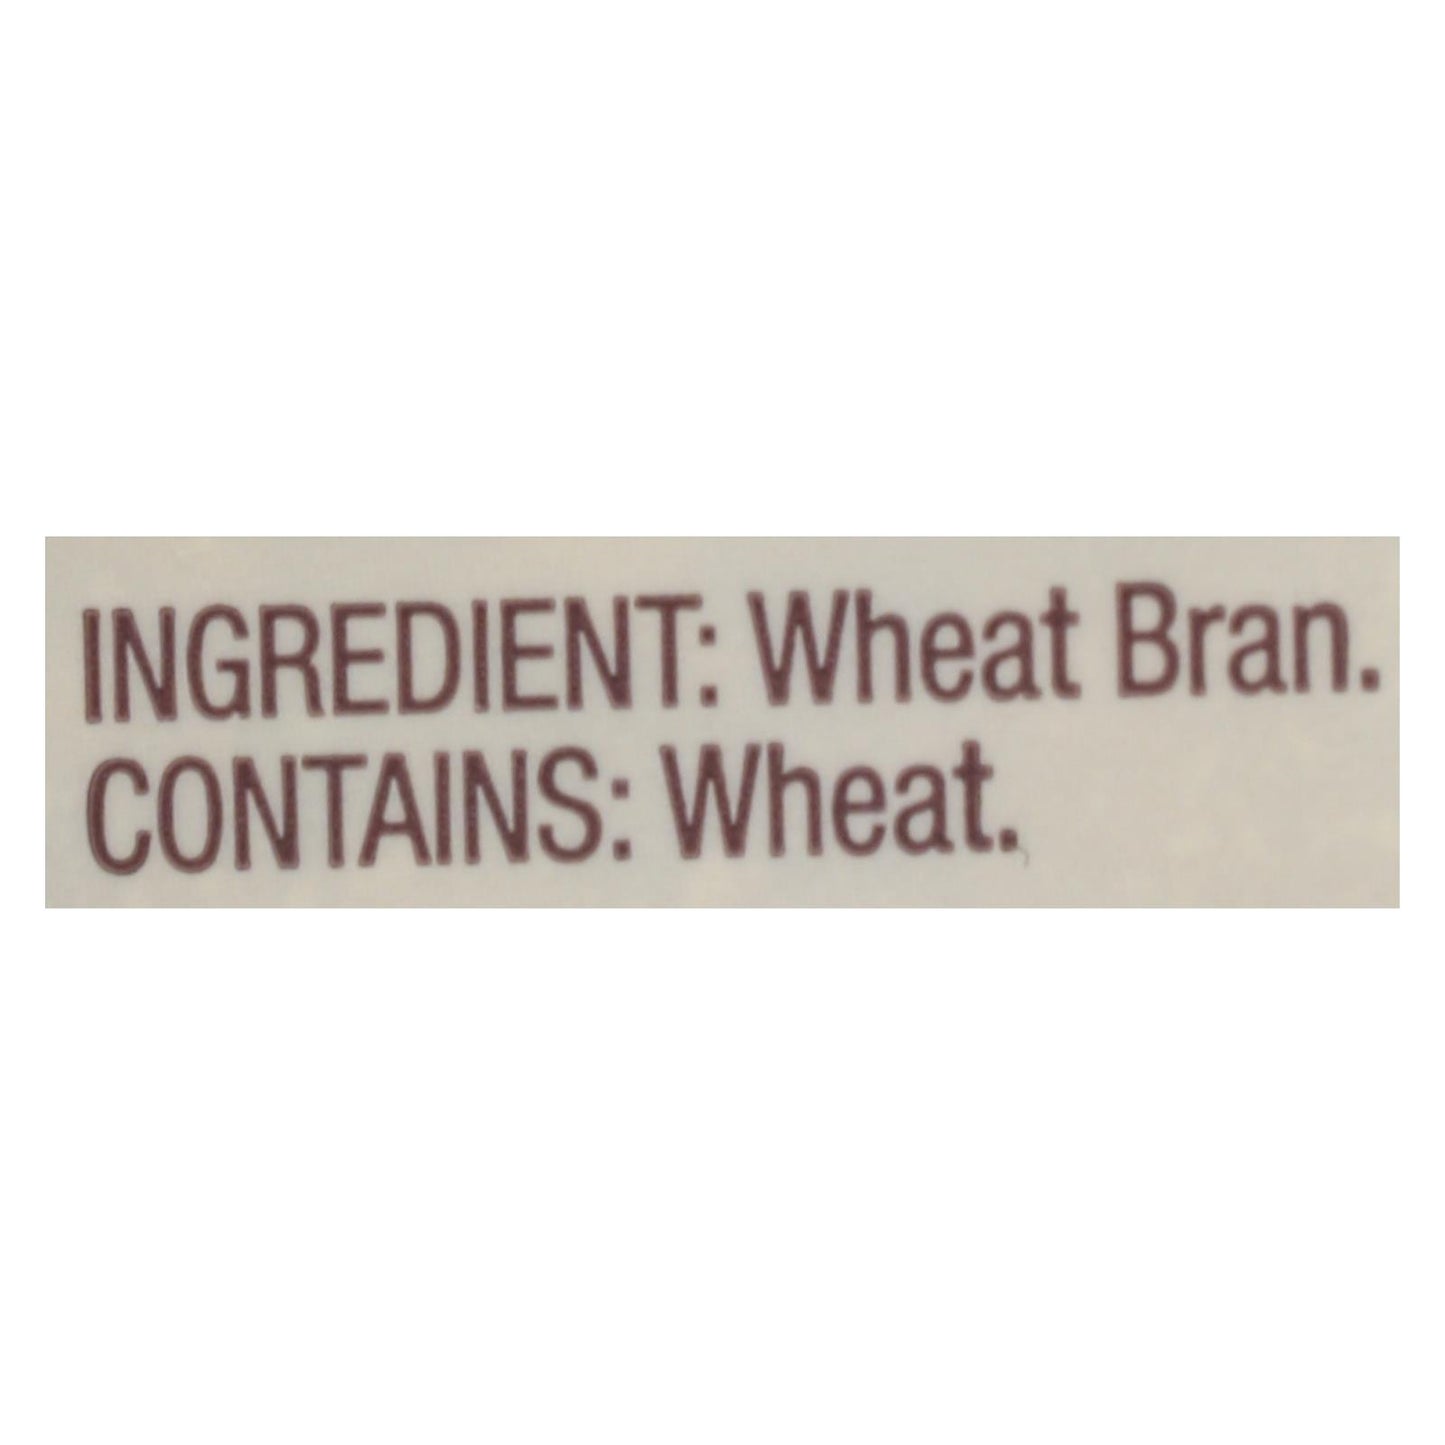 Bob's Red Mill - Wheat Bran - Case Of 4-8 Oz